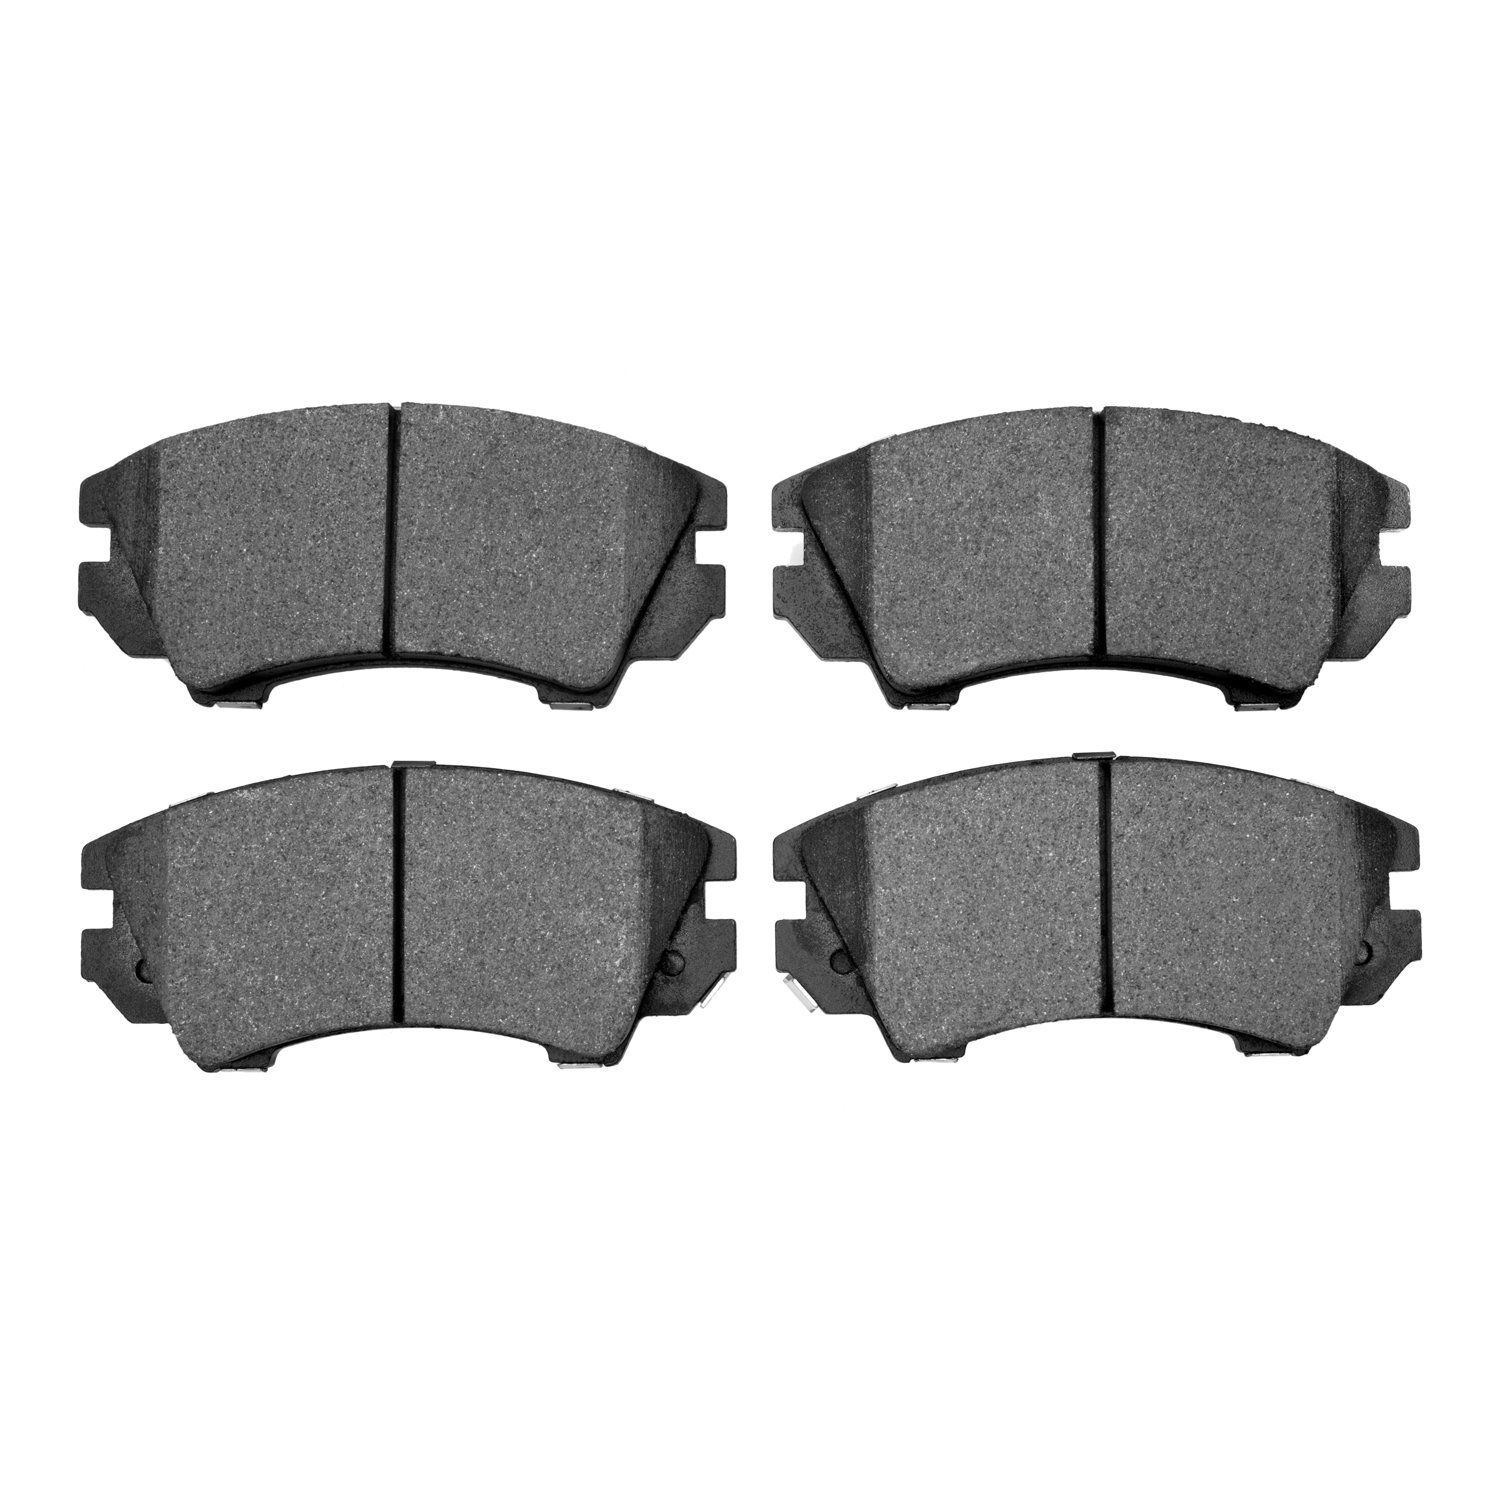 1310-1404-00 3000-Series Ceramic Brake Pads, 2010-2017 GM, Position: Front